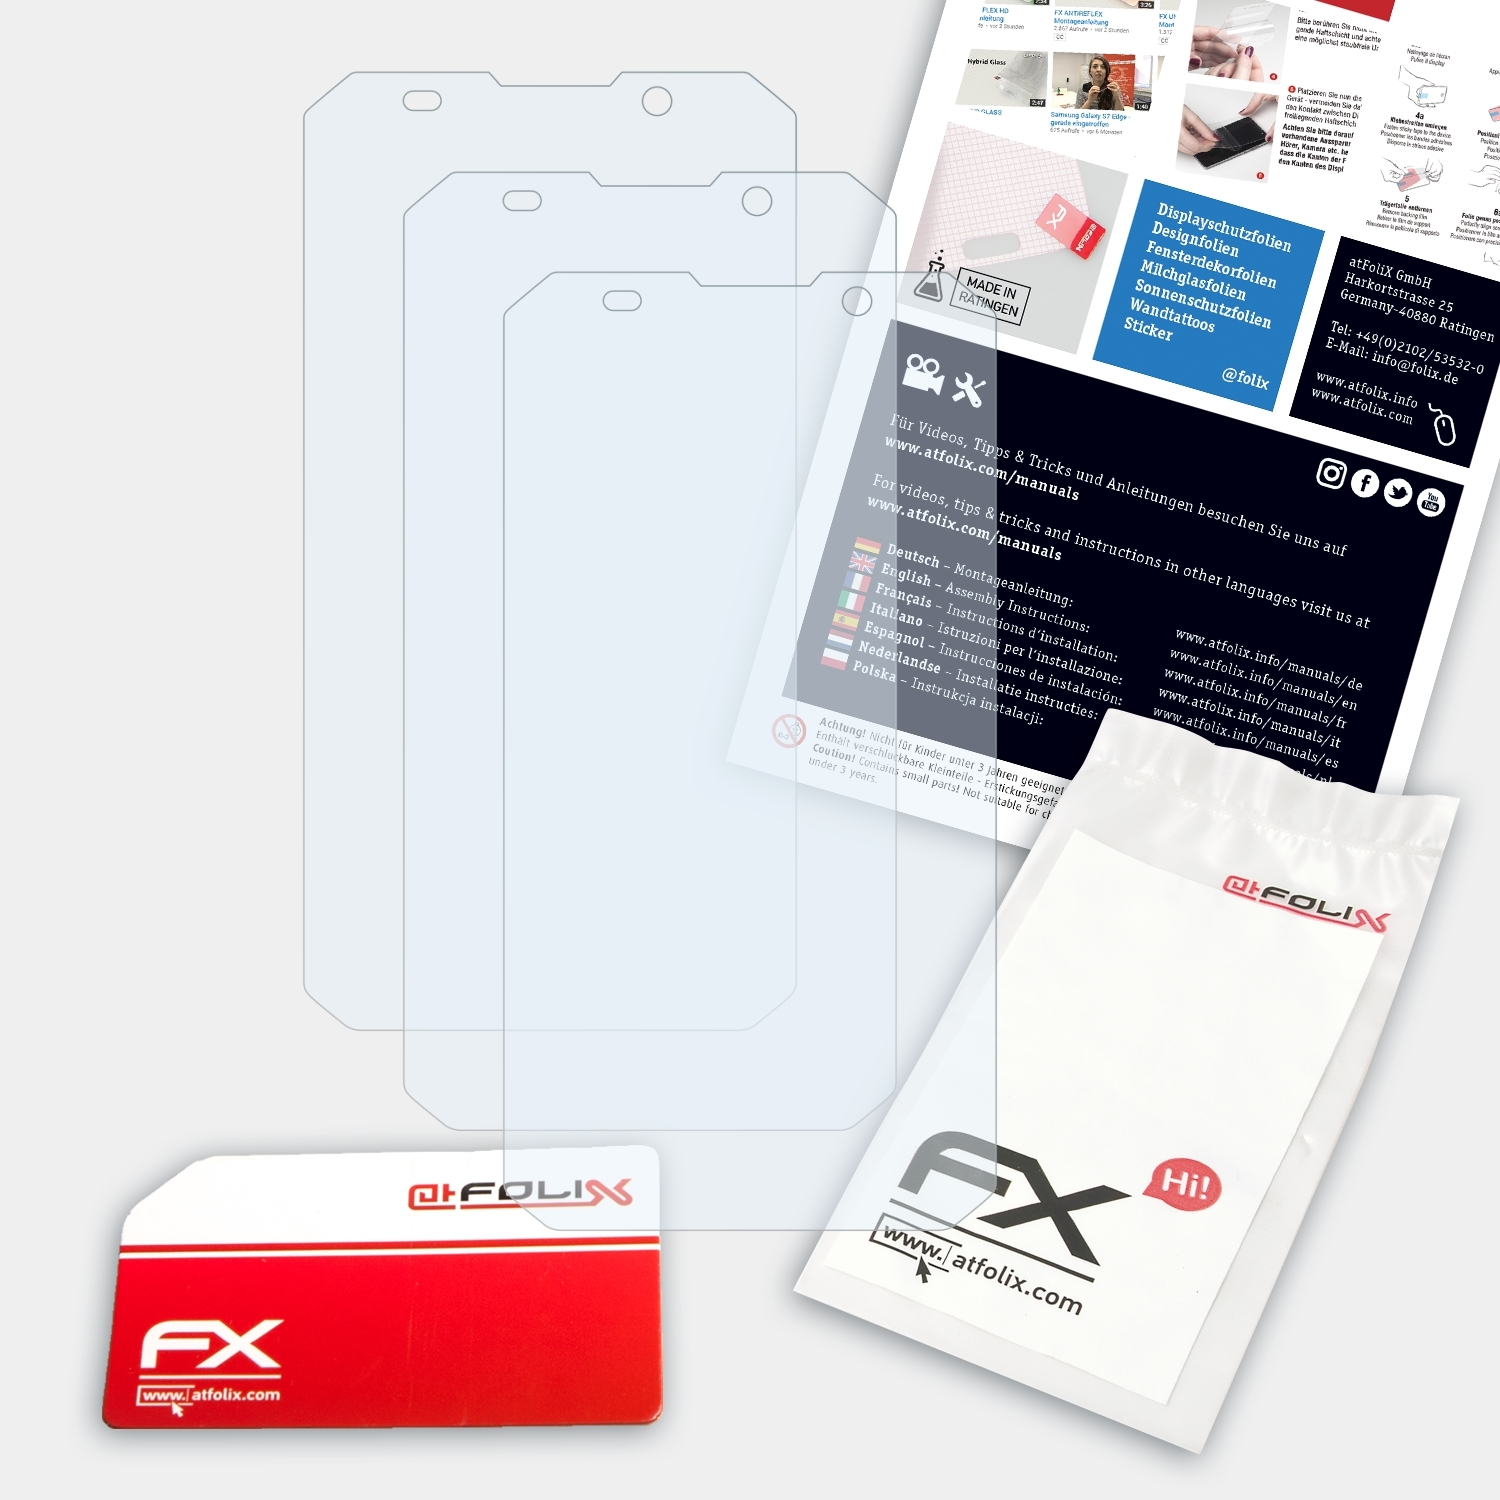 ATFOLIX 3x FX-Clear Displayschutz(für E&L W9)